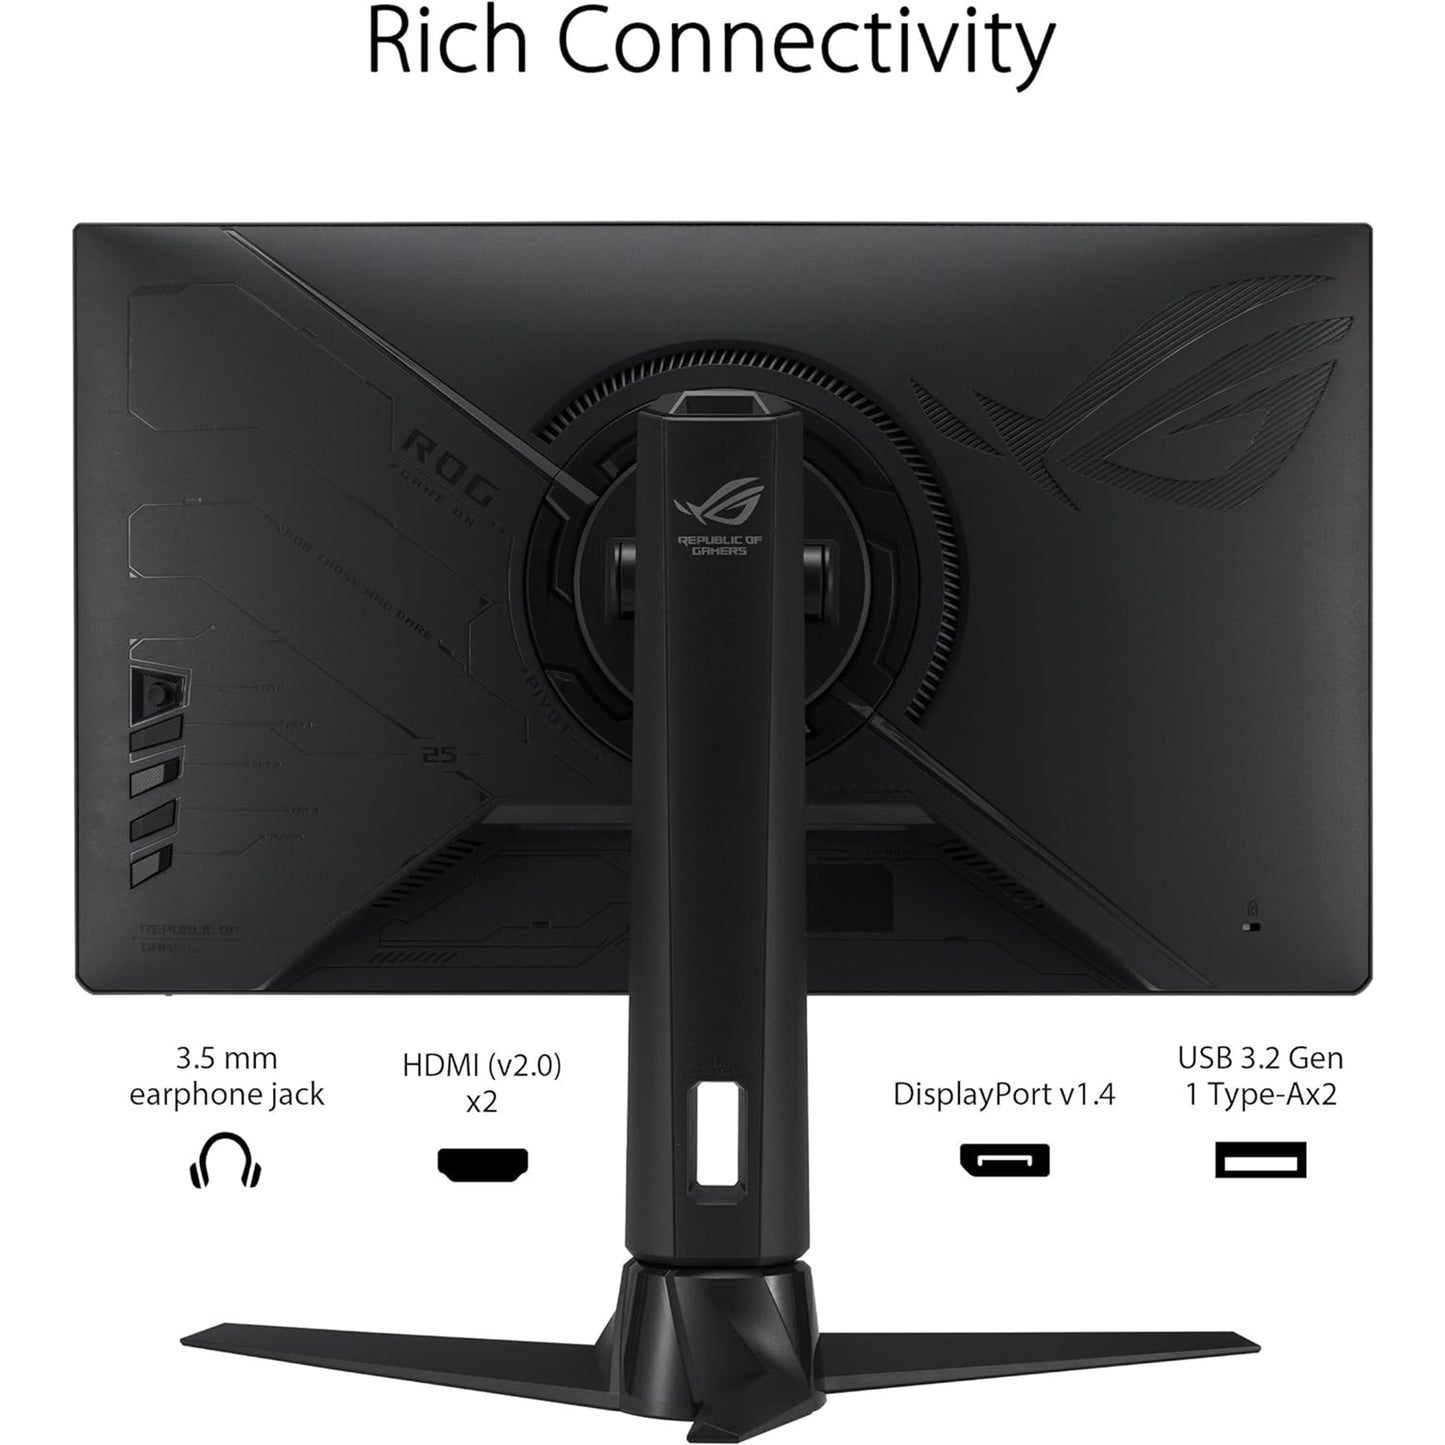 ASUS ROG Strix 380Hz 25” (24.5-inch viewable) 1080P HDR eSports Gaming Monitor (XG259QN) - 0.3ms, Fast IPS, FreeSync Premium, ELMB Sync, DisplayPort, HDMI, USB Hub, DisplayHDR 400